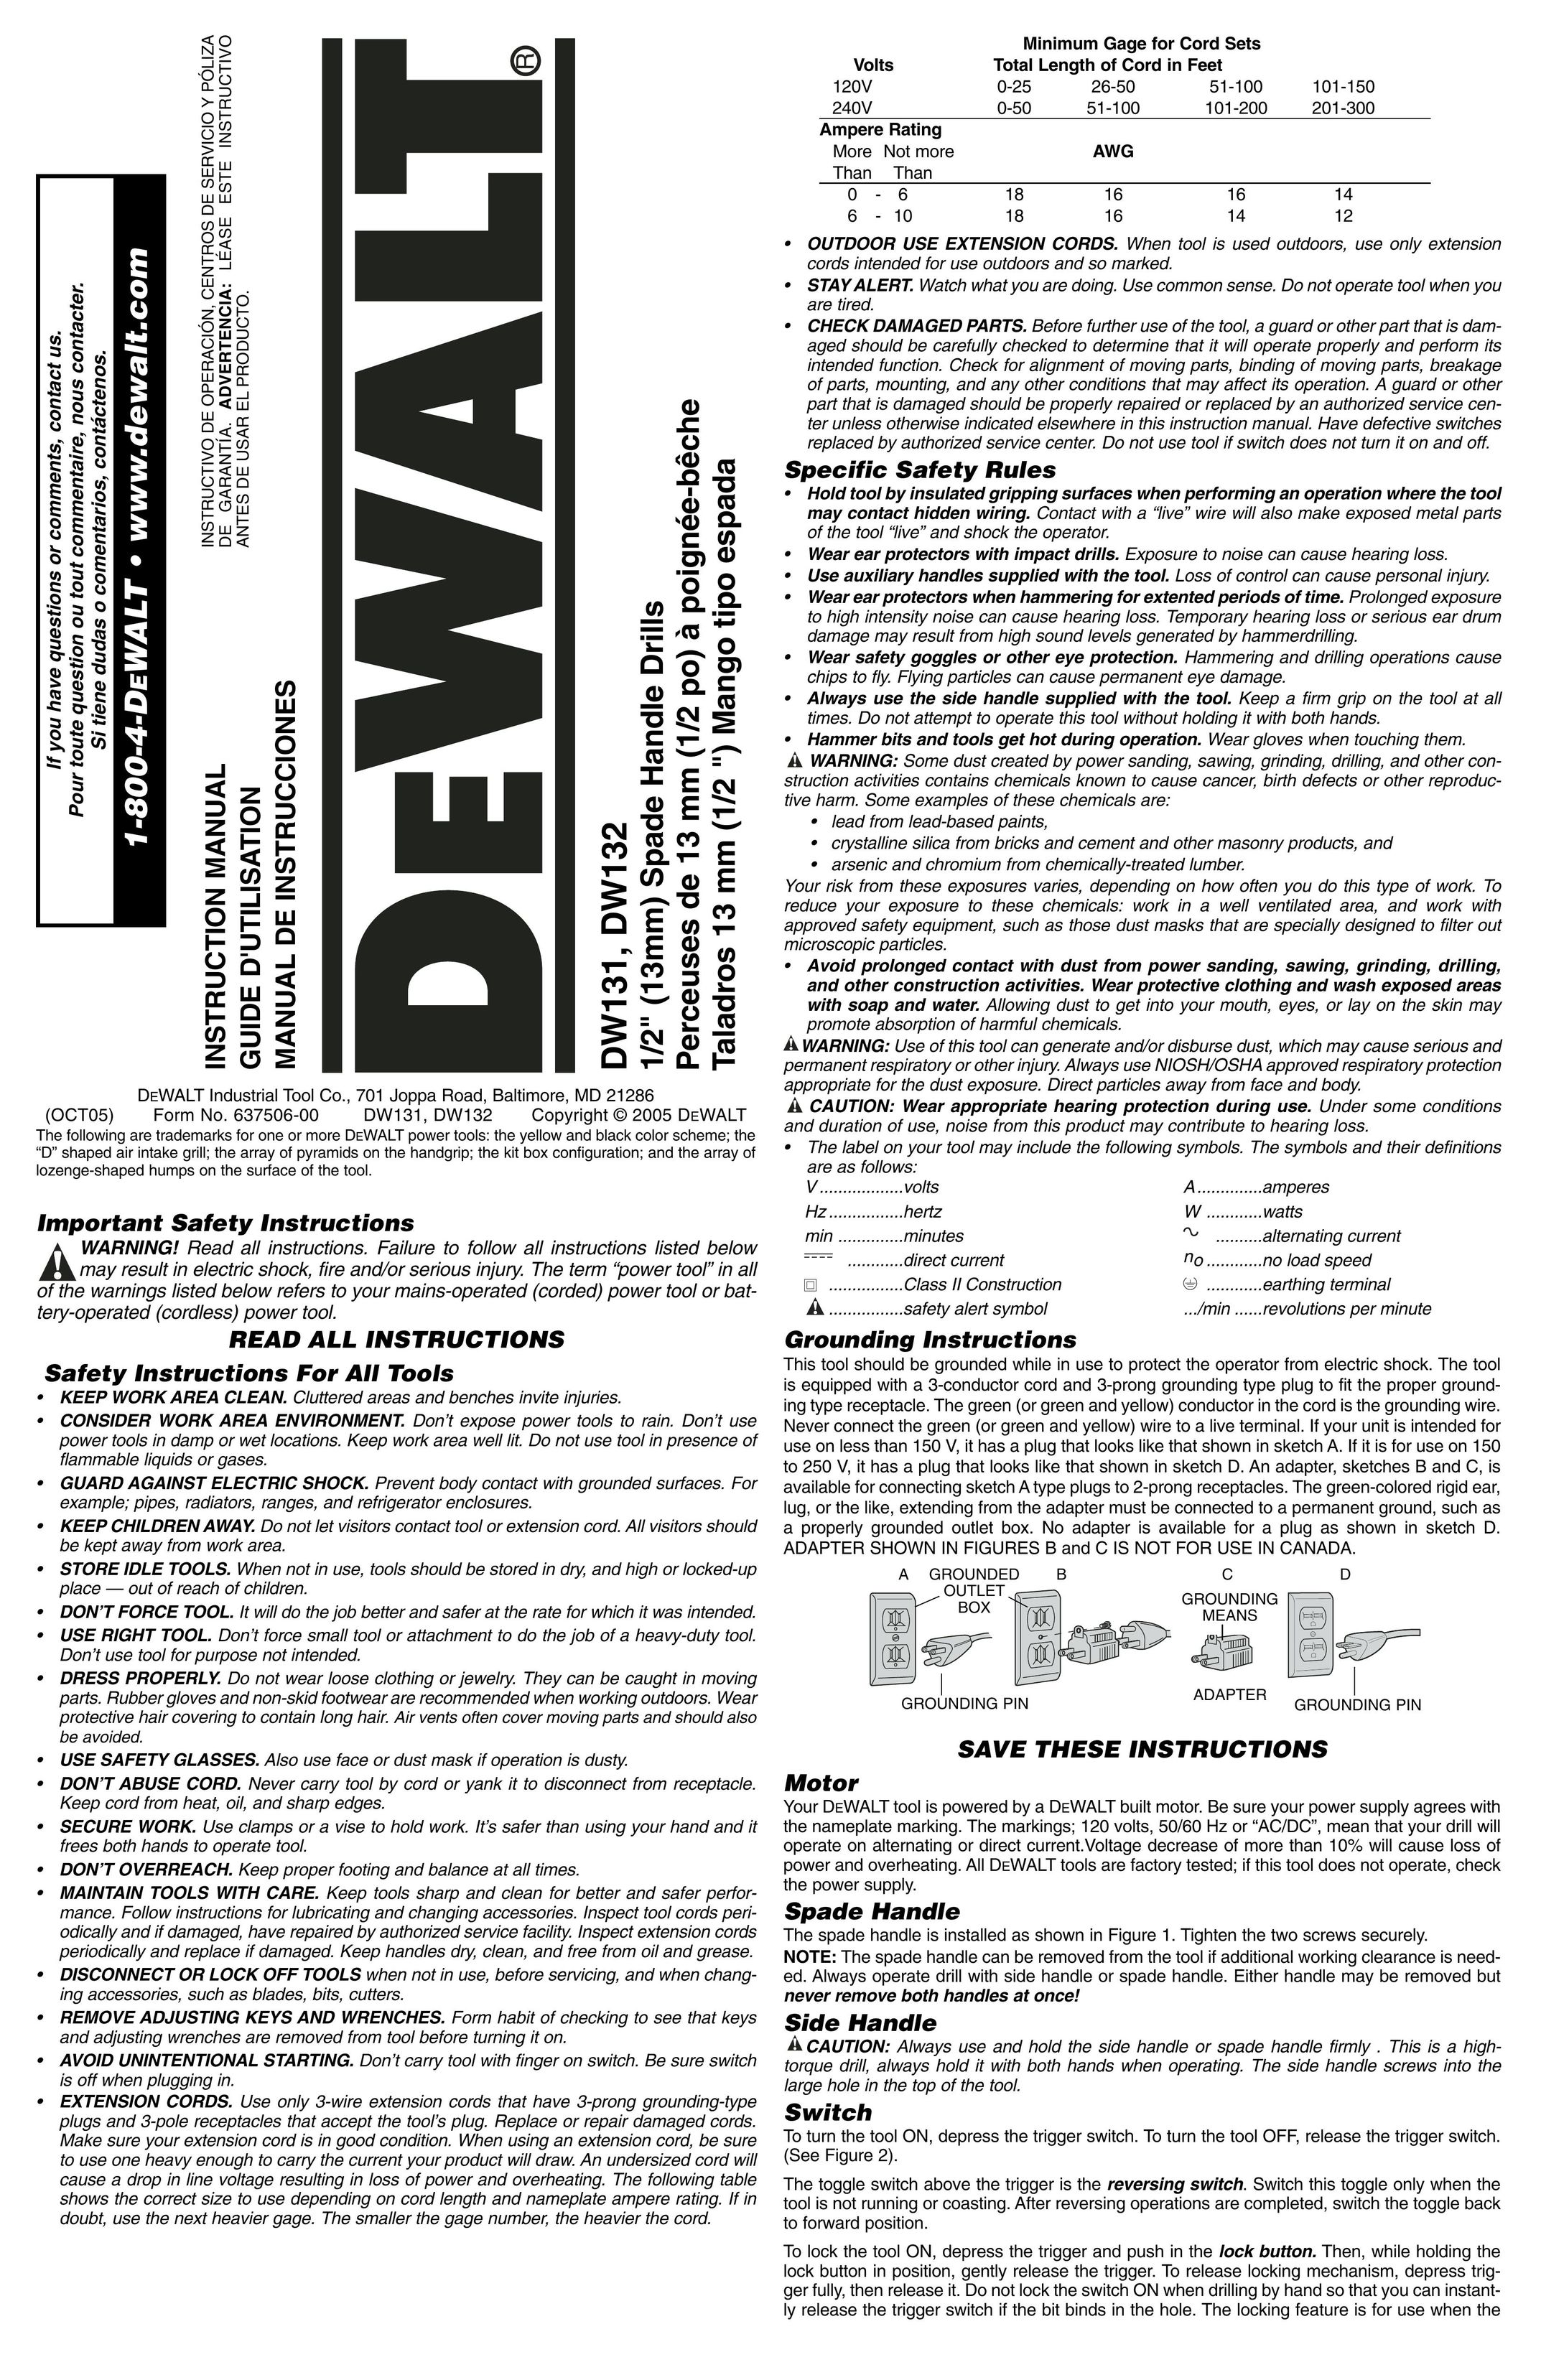 DeWalt DW131 Drill User Manual